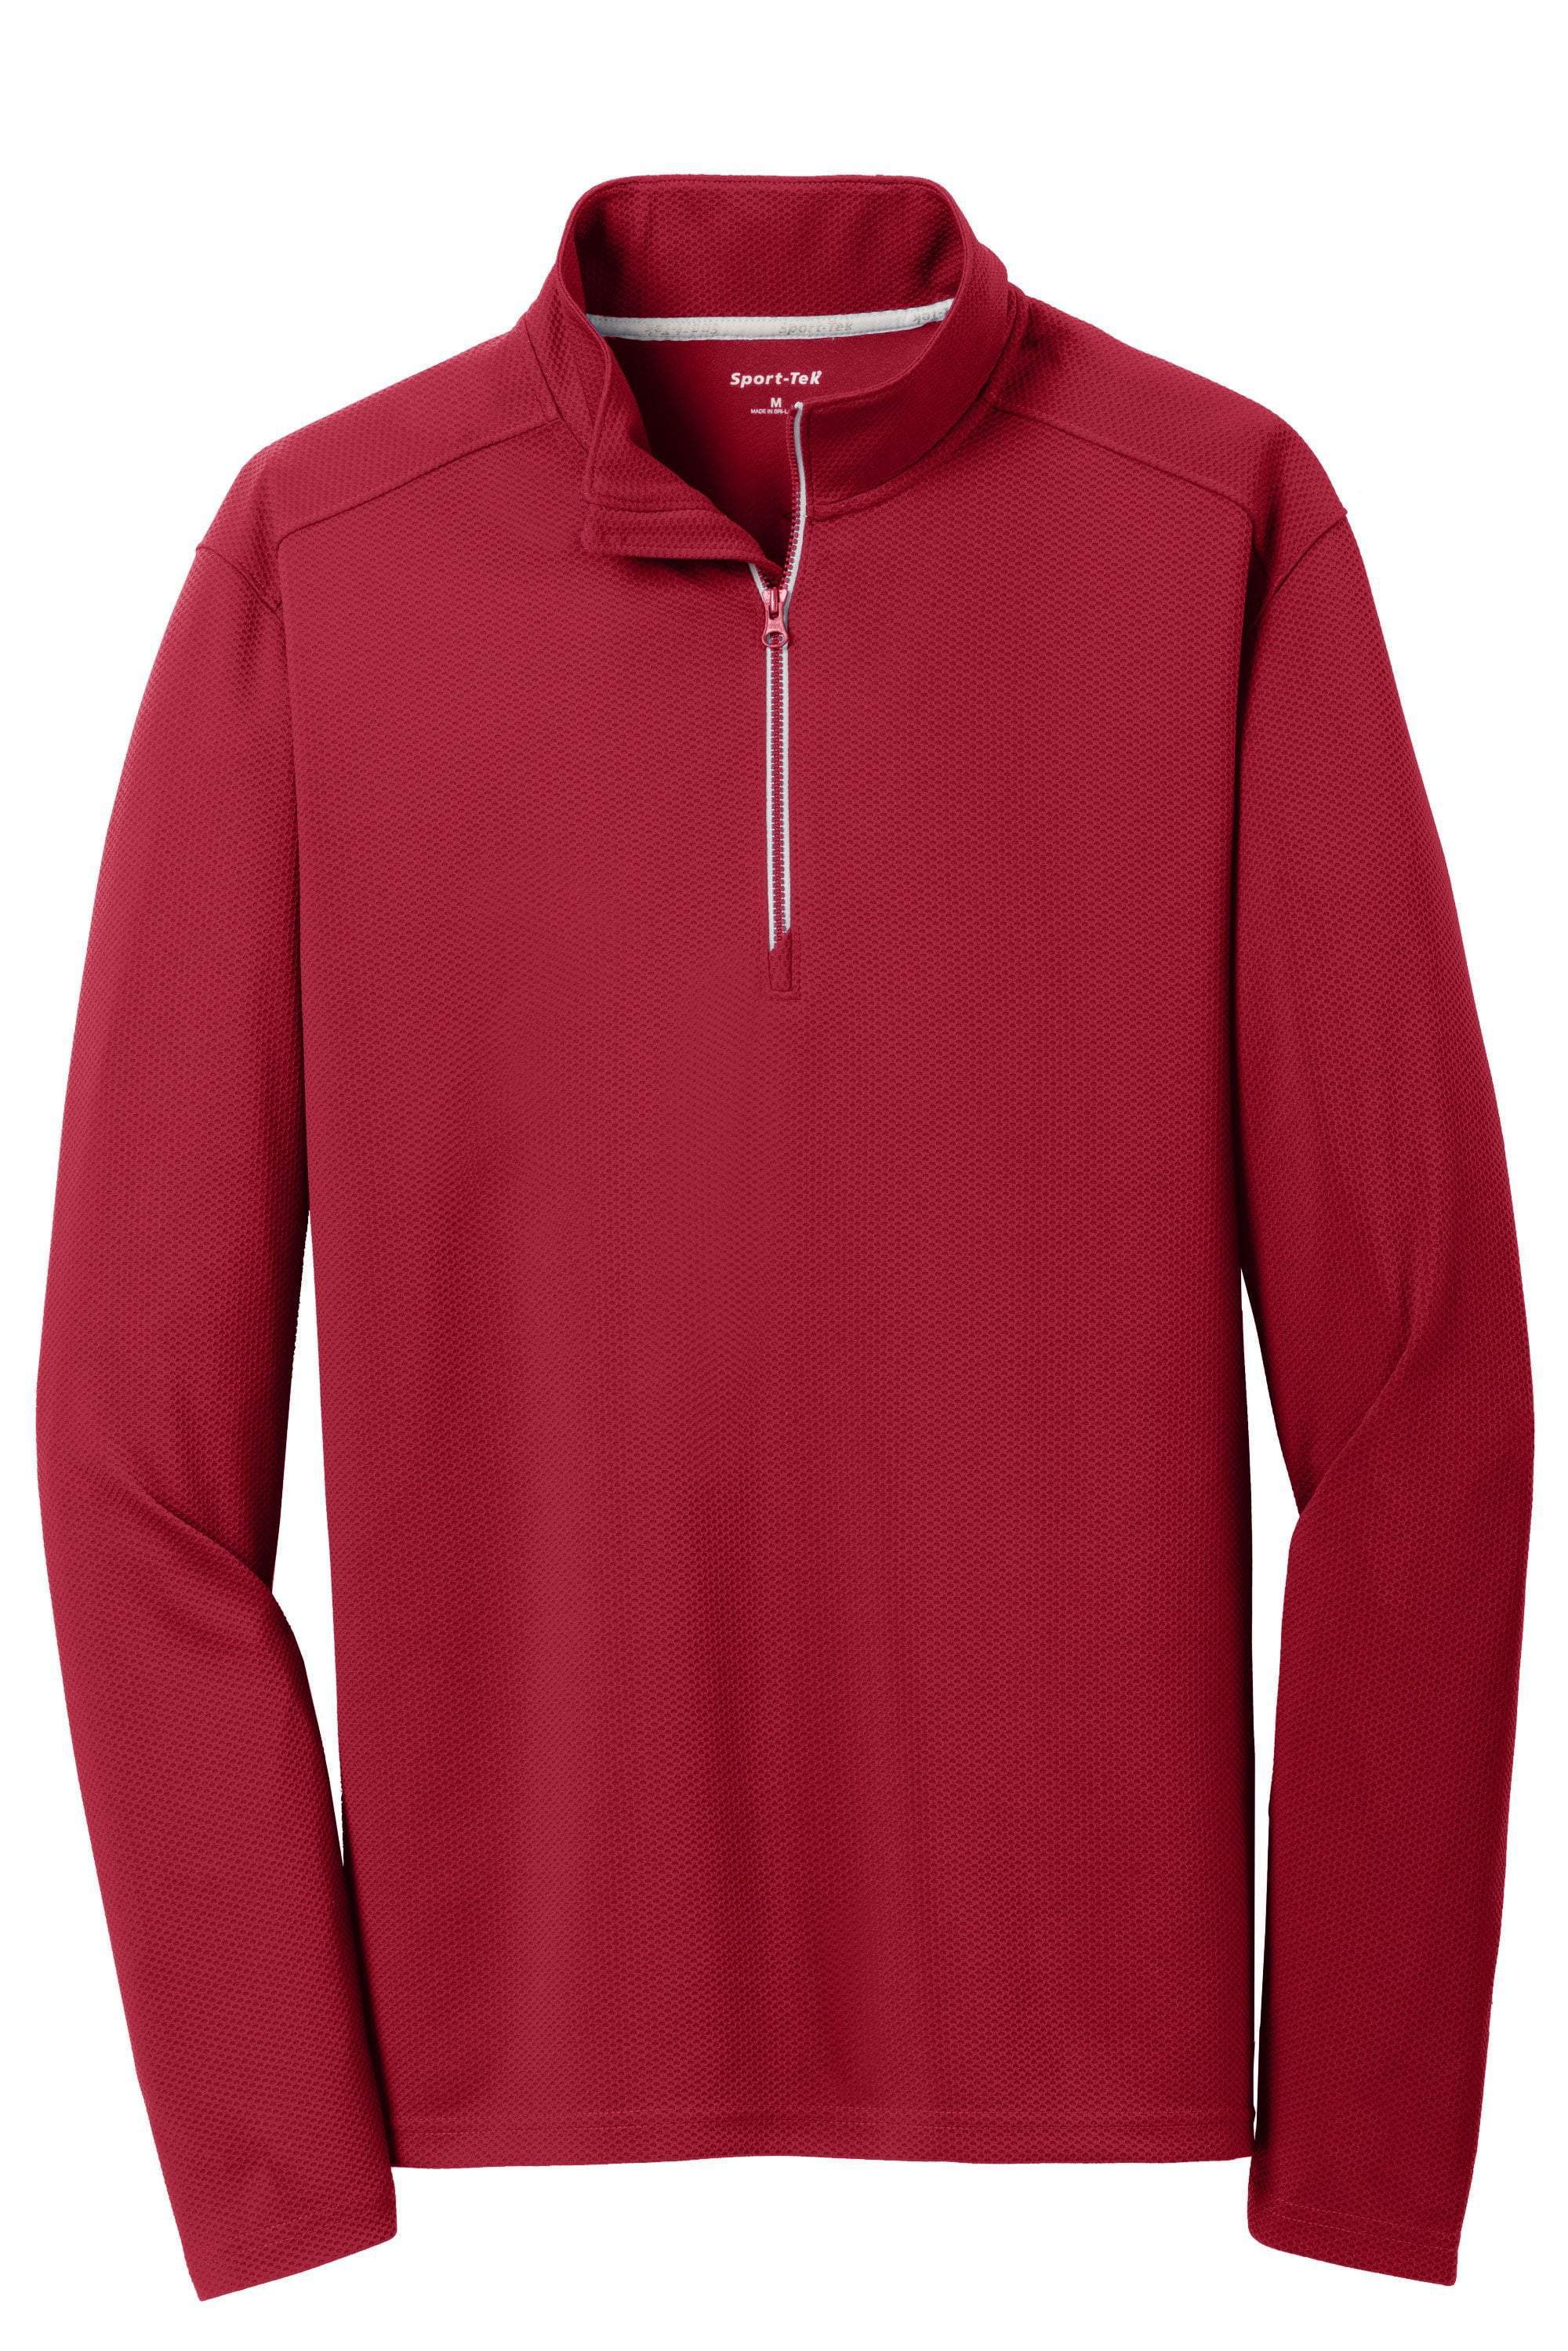 ST860 | Sport-Tek® Unisex Sport-Wick® Textured 1/4-Zip Pullover - RED /  Choose Size: